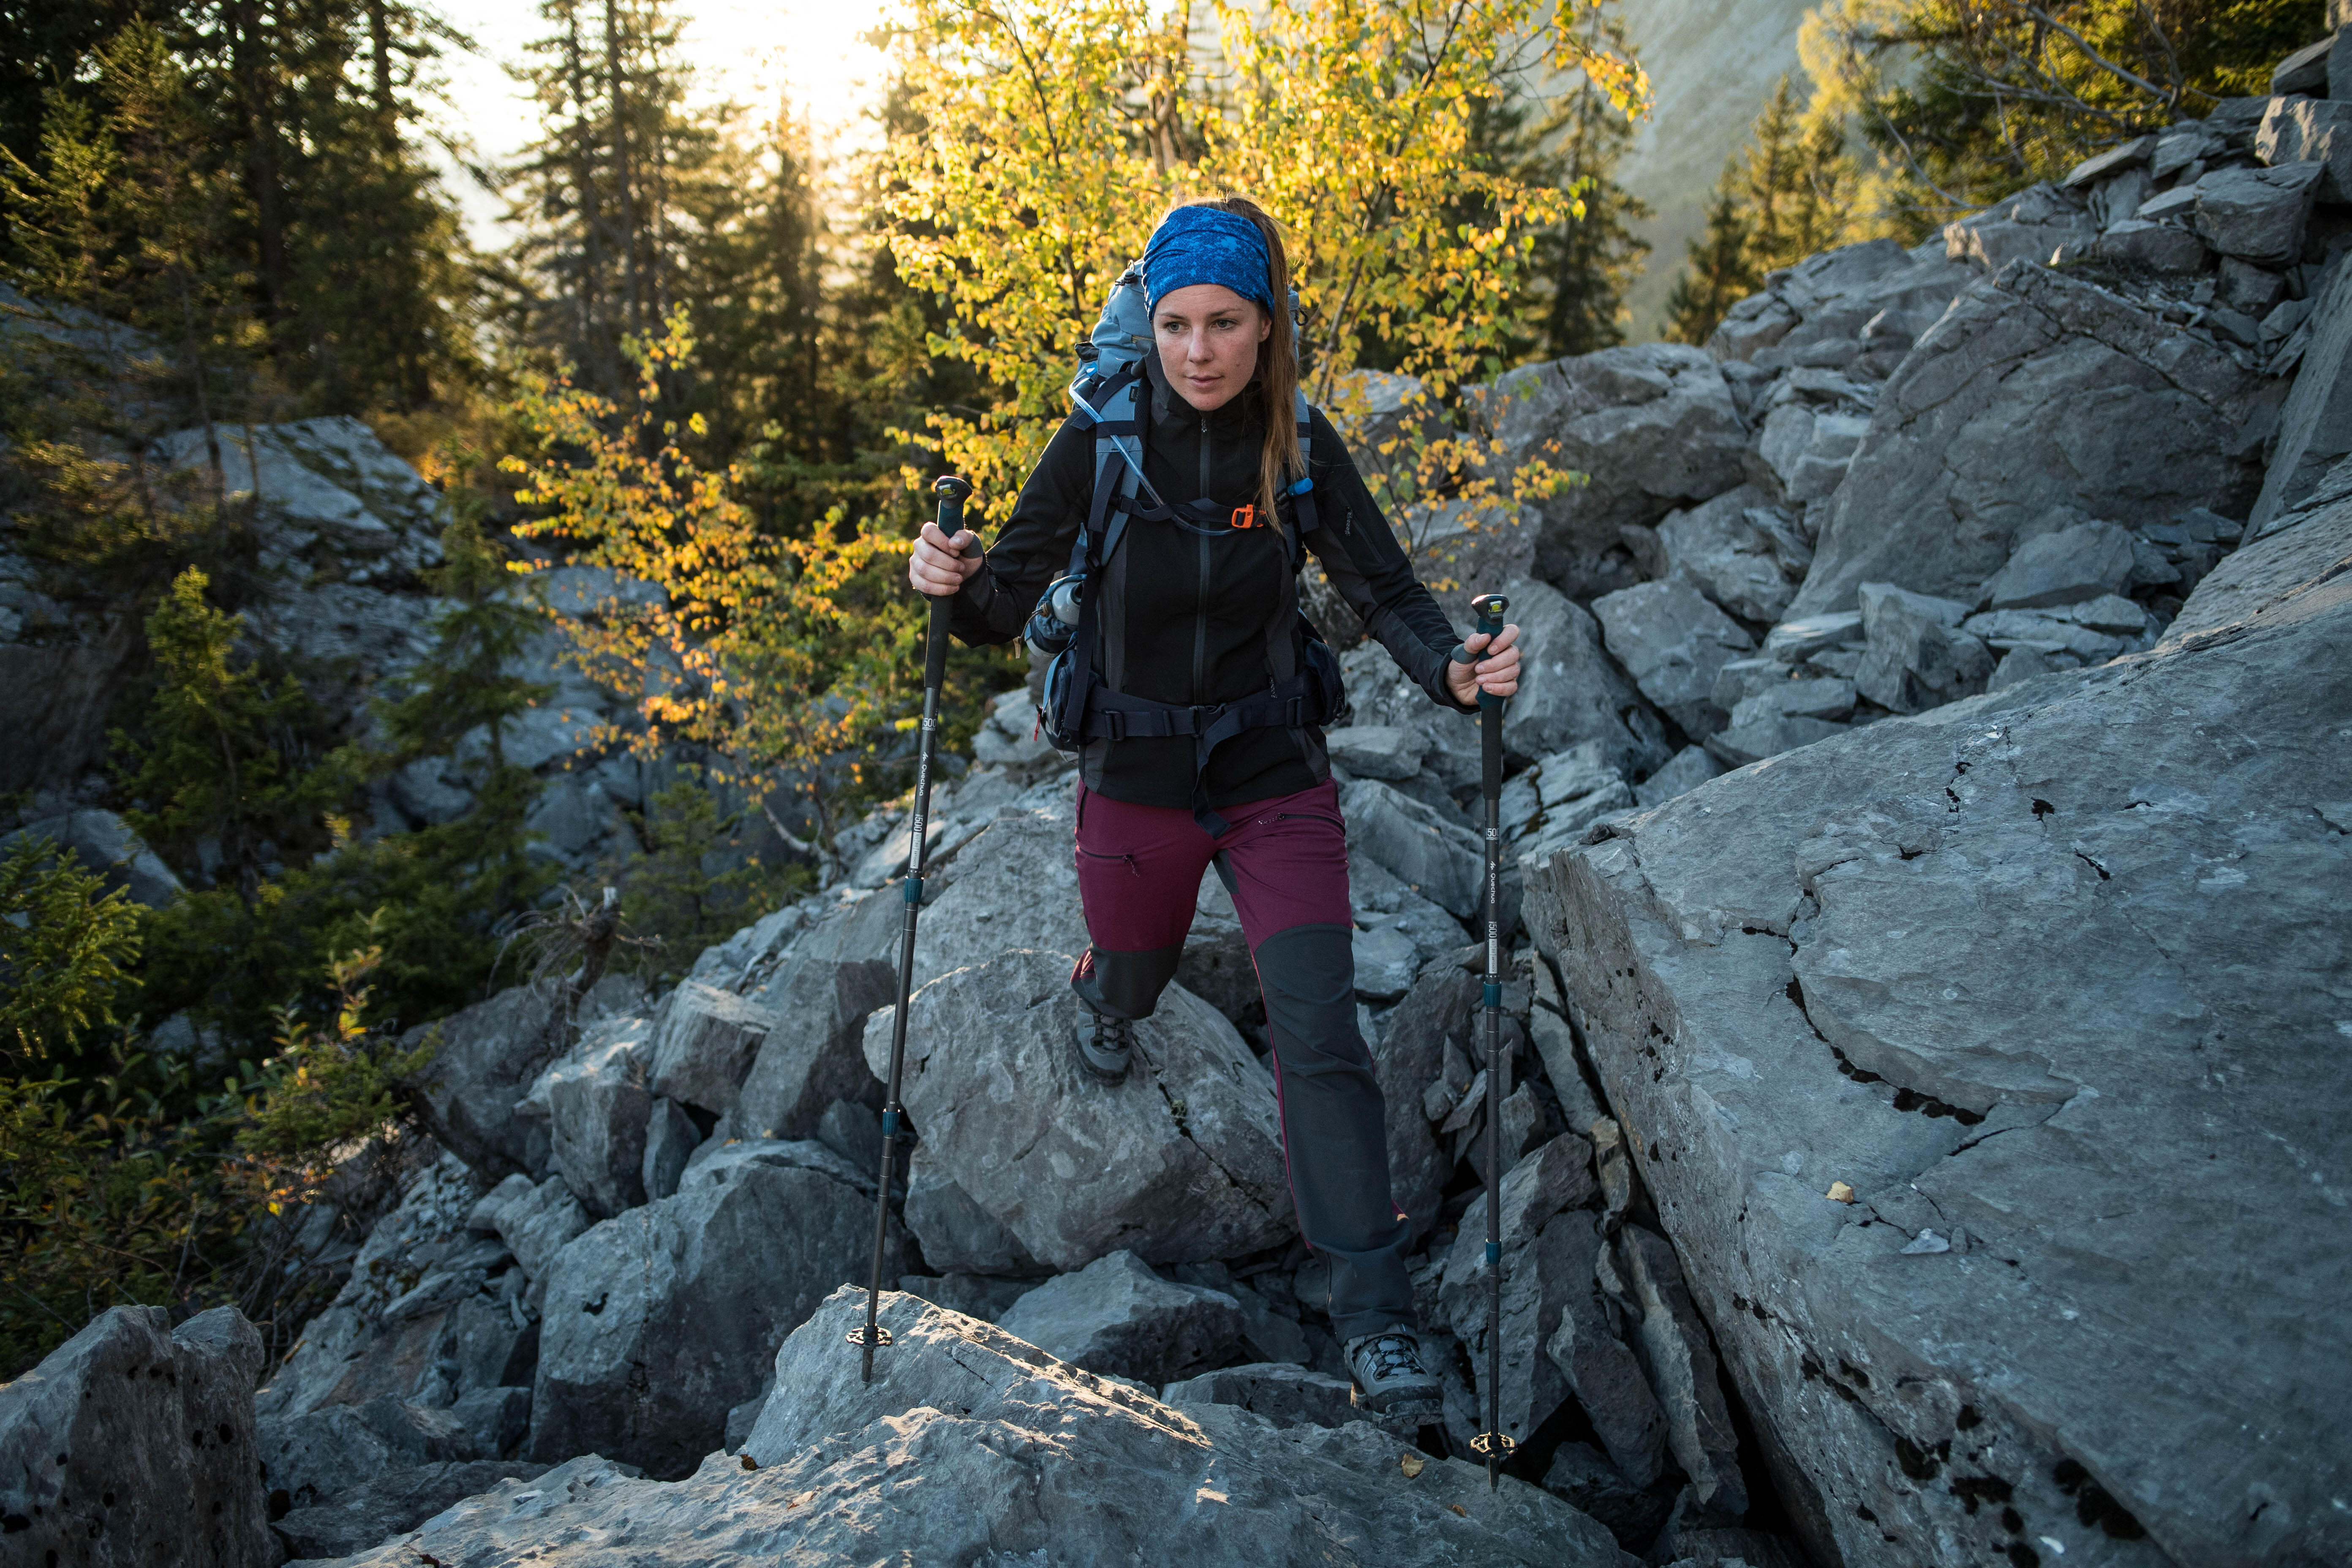 MT 900 hiking jacket - Women - FORCLAZ